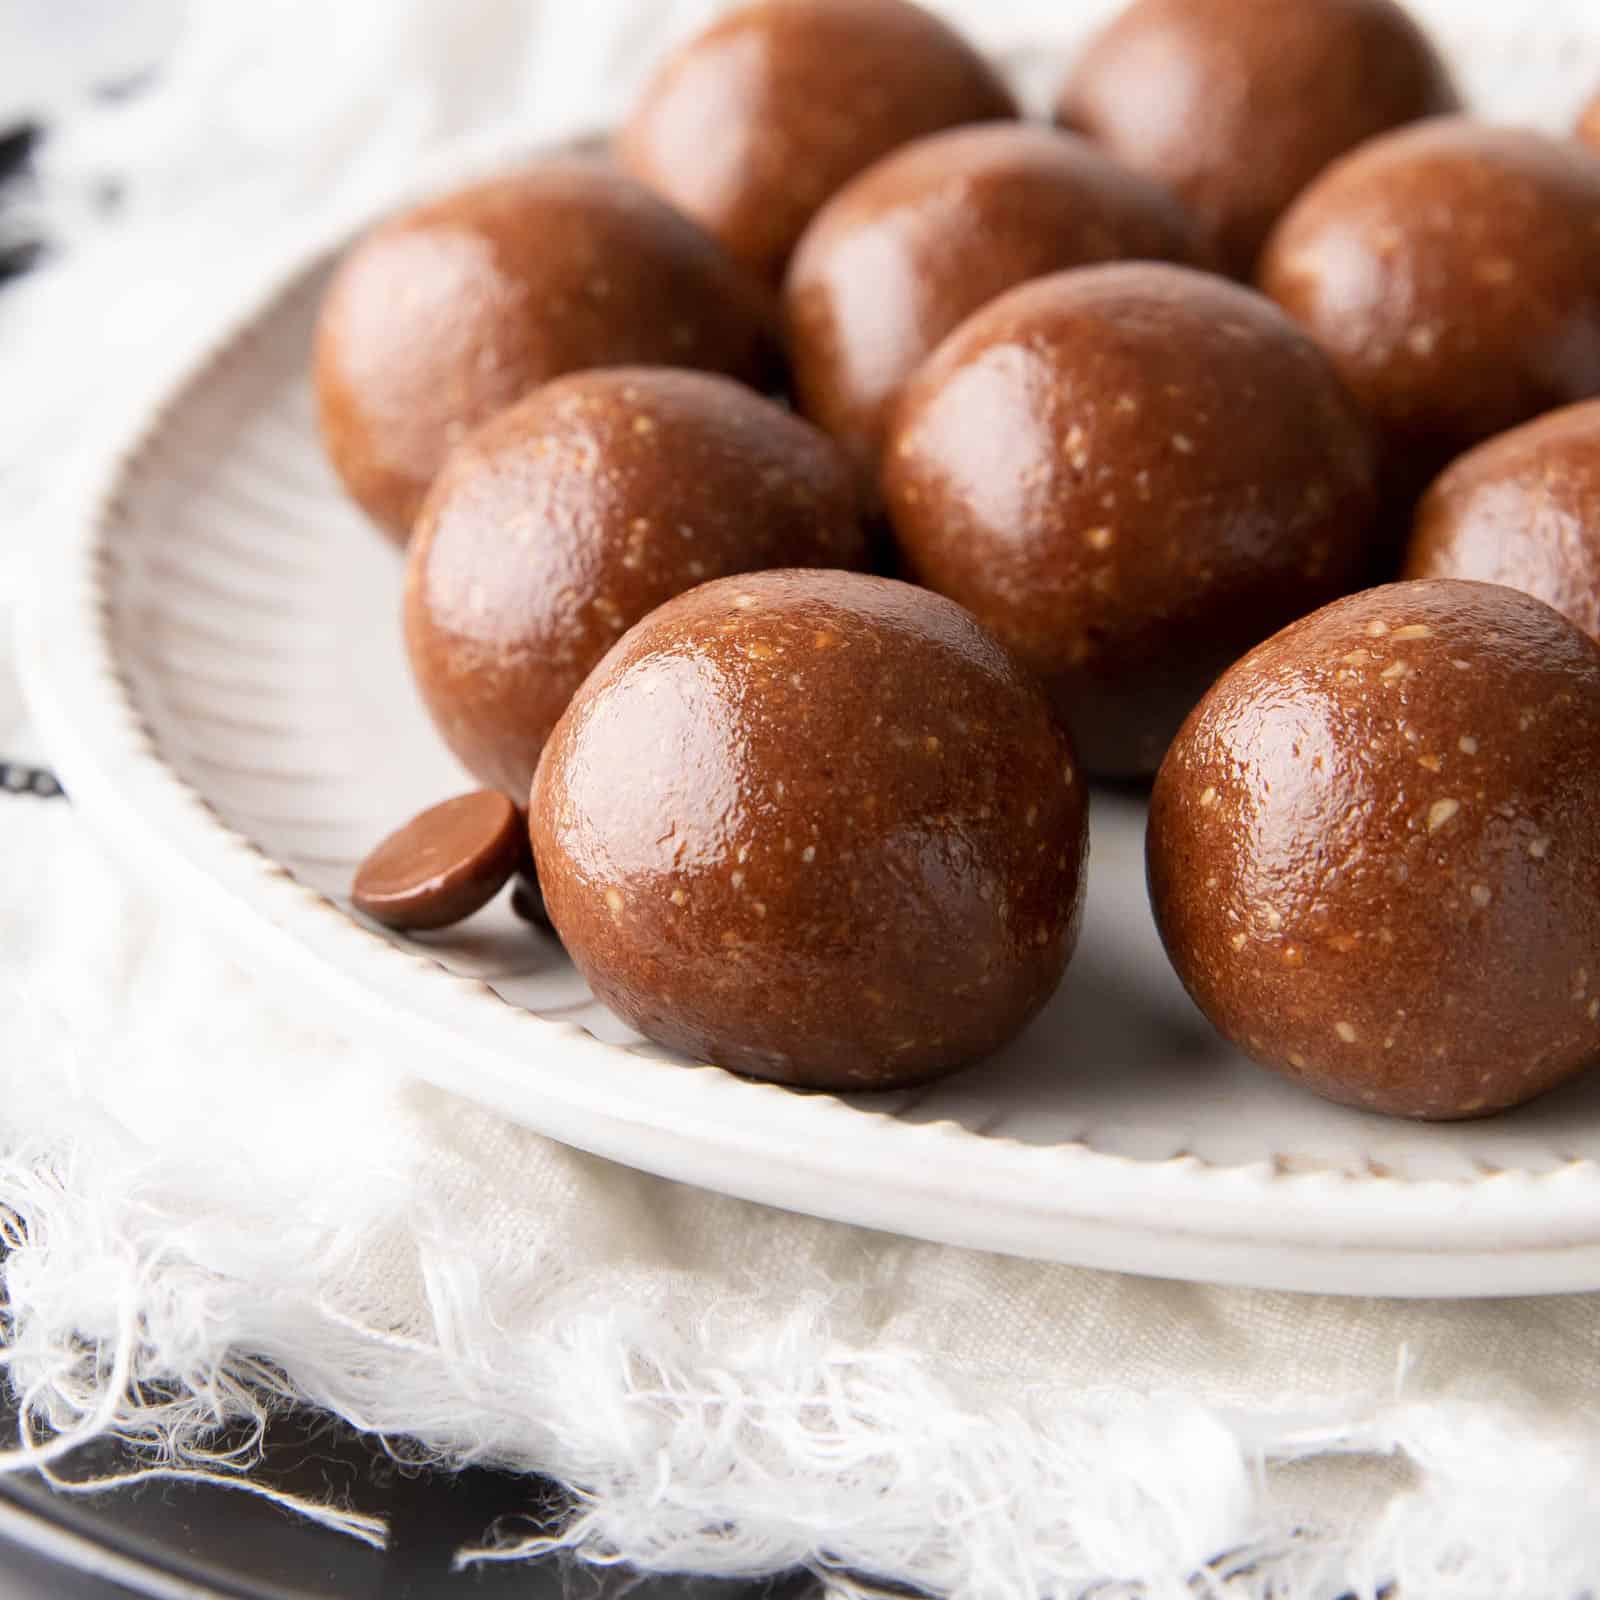 4 Ingredient Hazelnut Chocolate Energy Balls – Nutella!